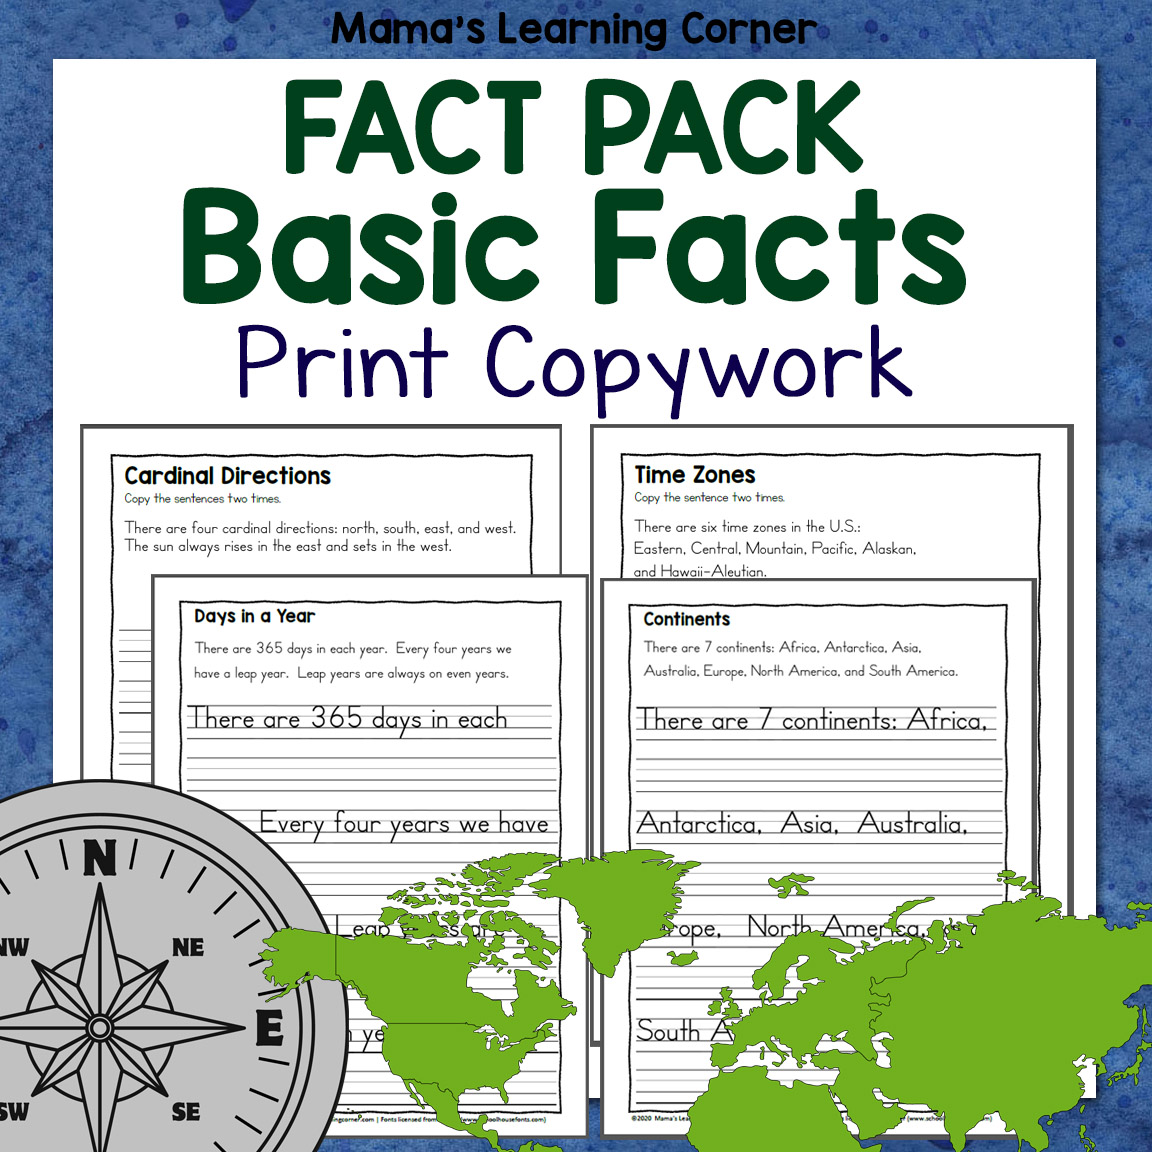 Basics Fact Pack Print Copywork